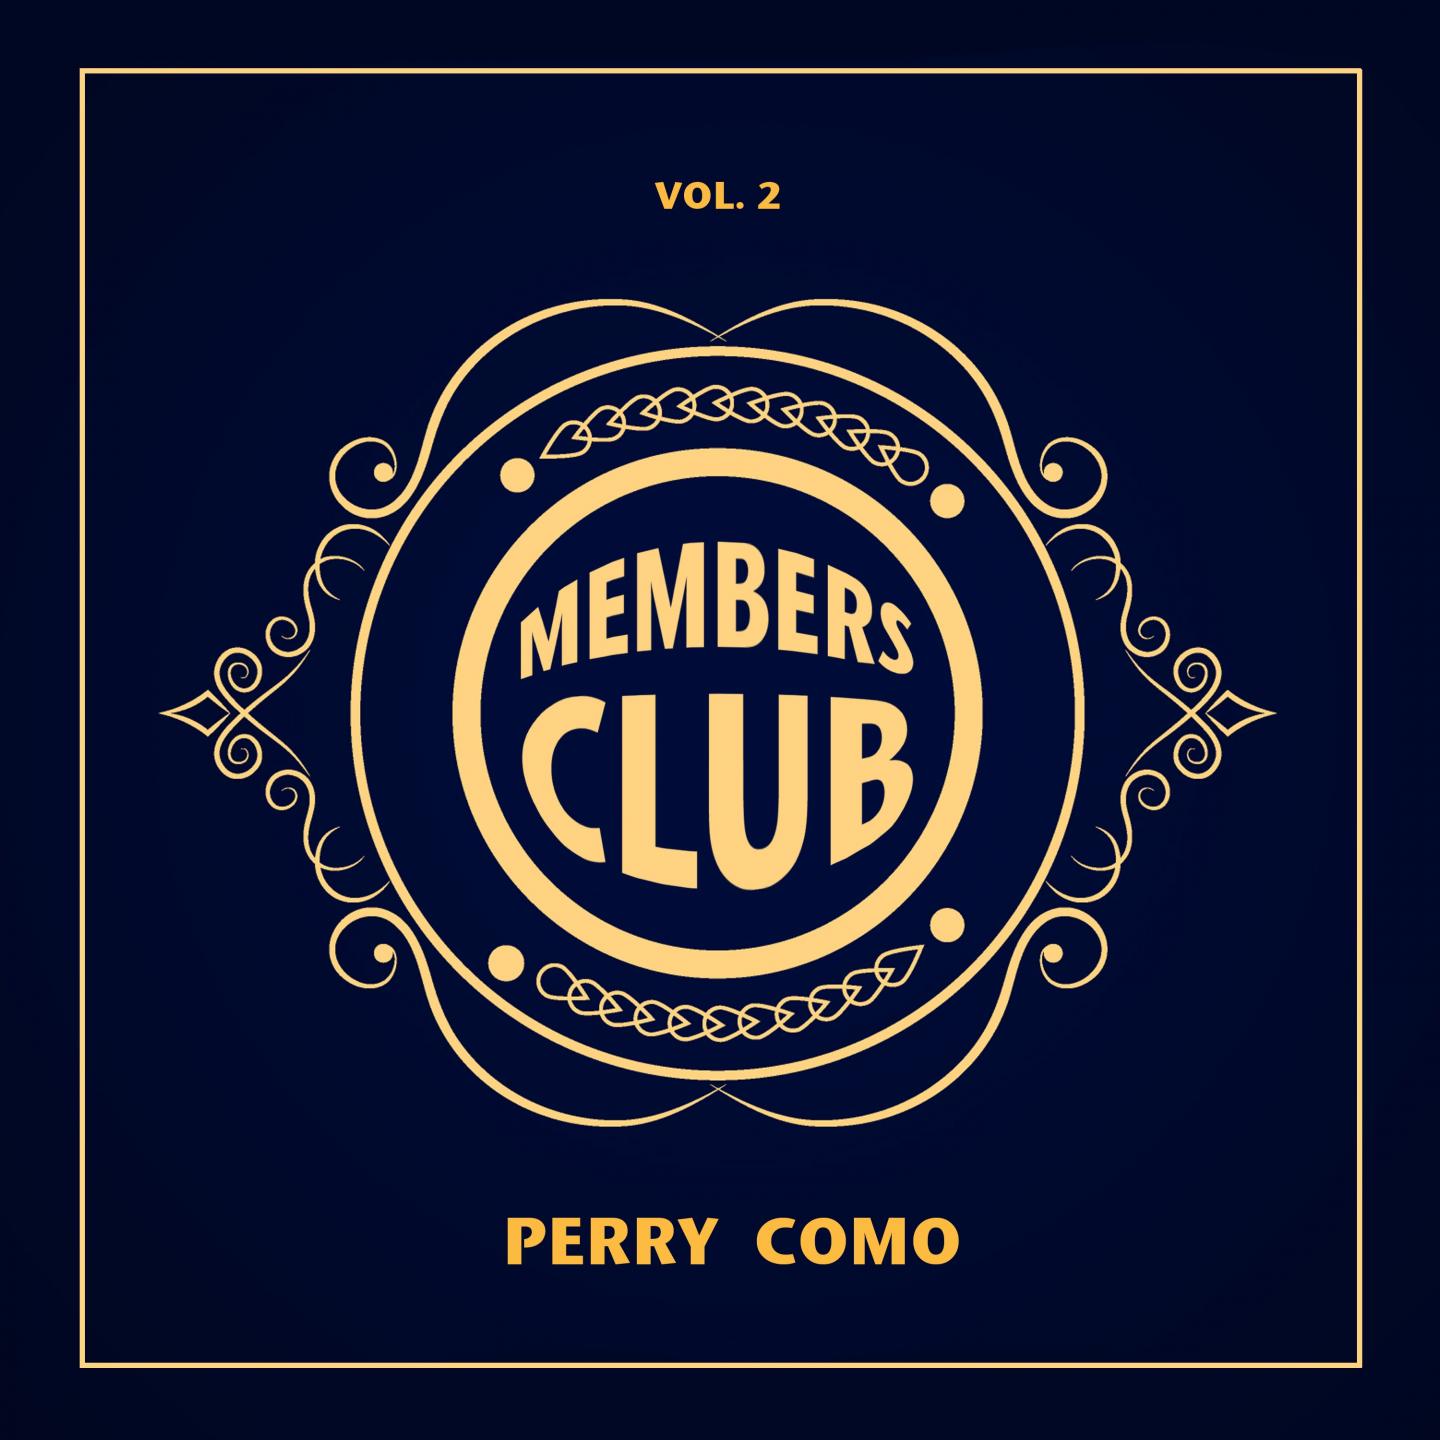 Members Club, Vol. 2